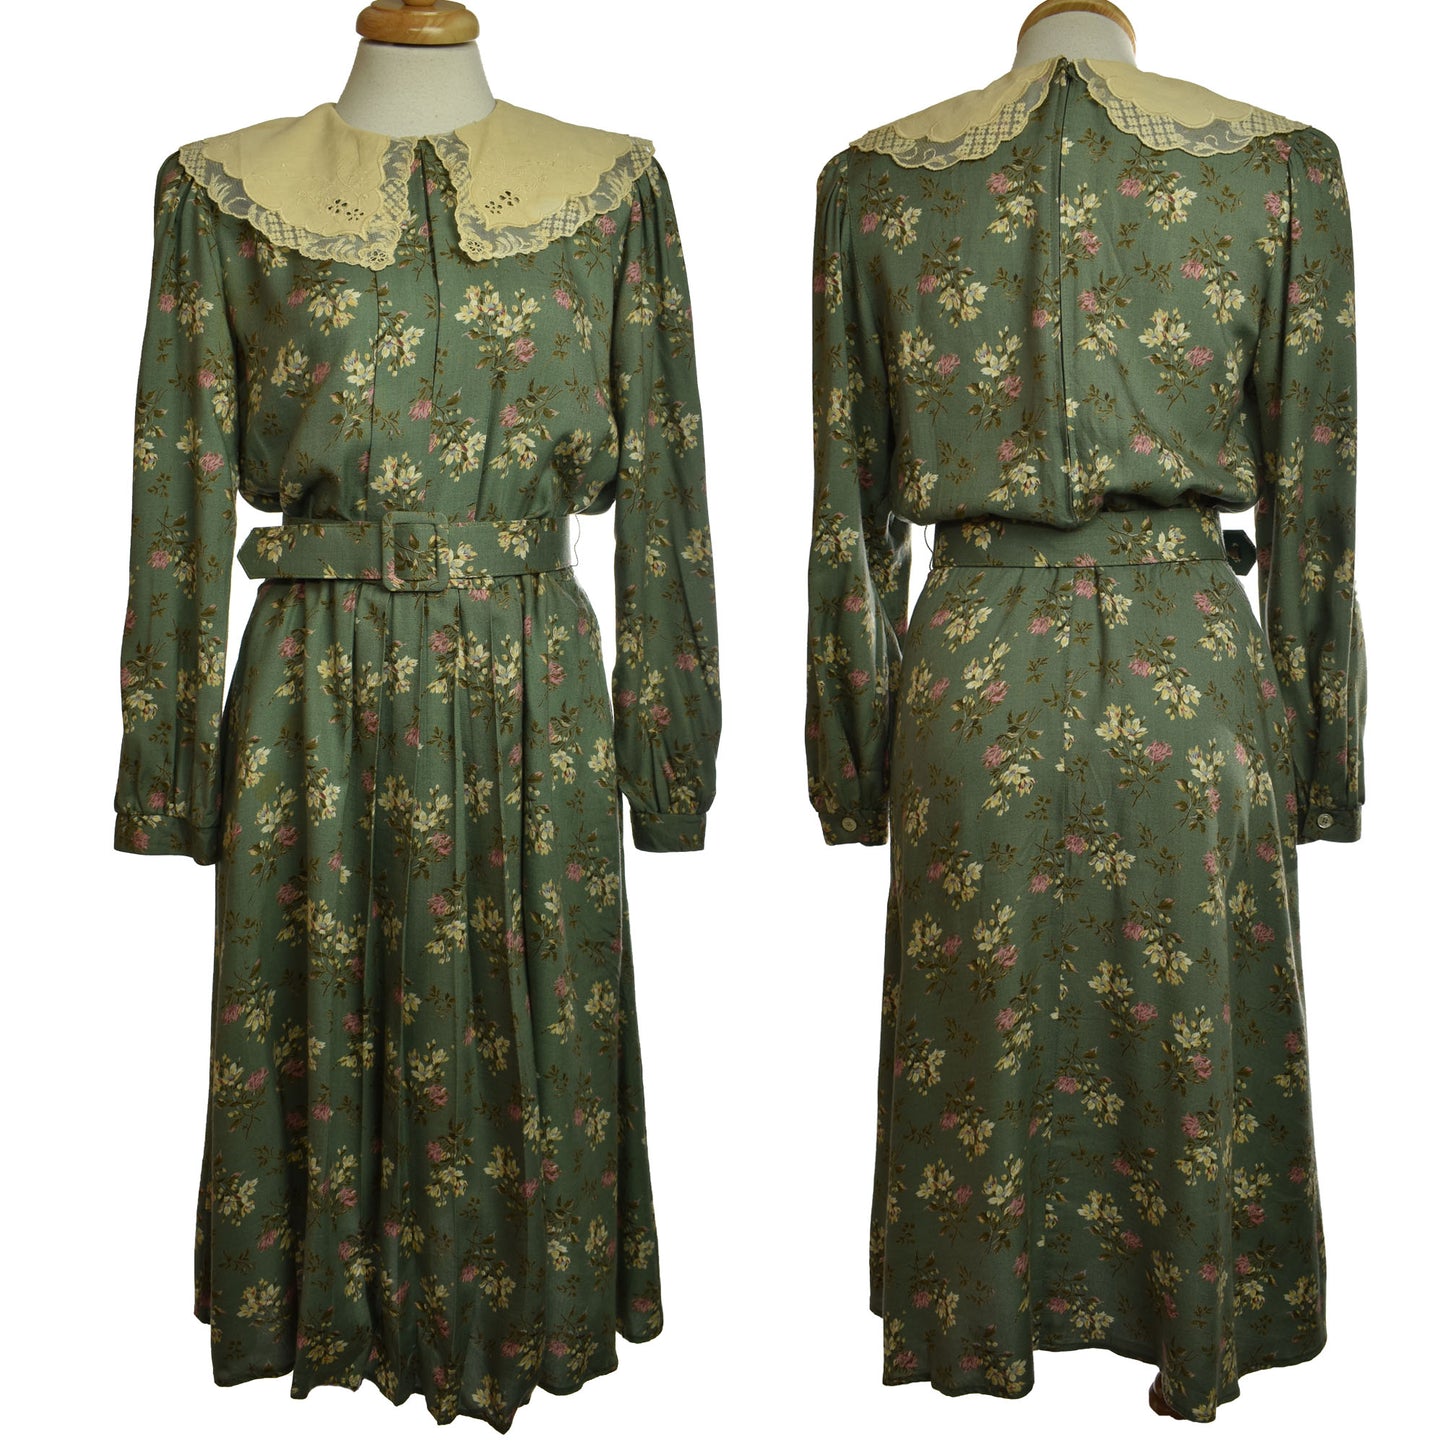 Vintage 80s Pilgrim Collar Floral Pattern Dress - Laura Ashley Style